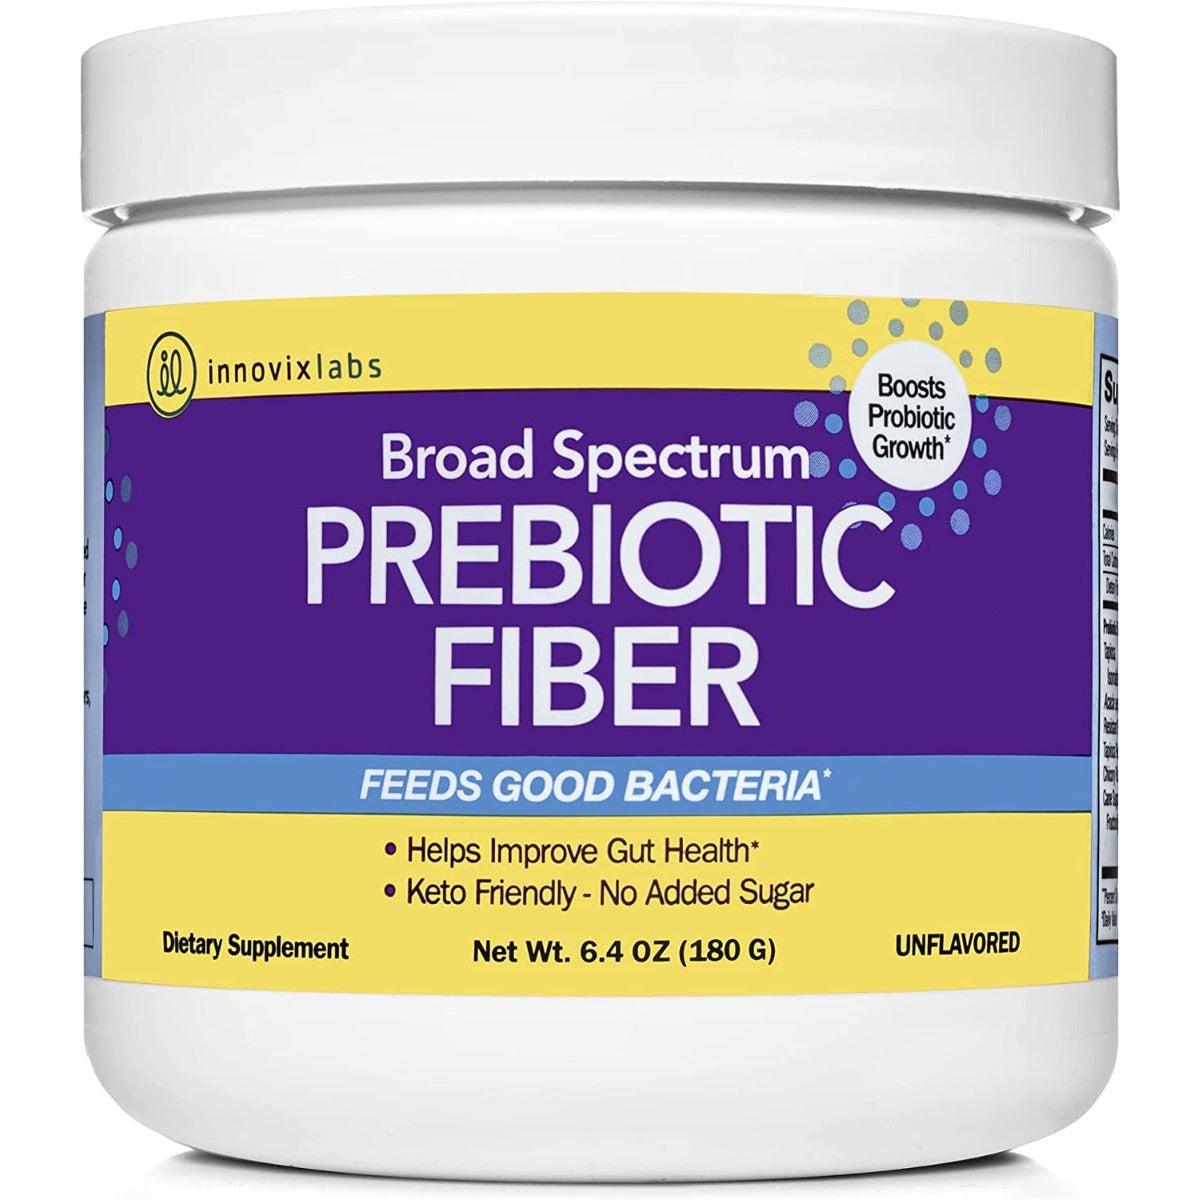 InnovixLabs Broad Spectrum Prebiotic Fiber Unflavored 180g